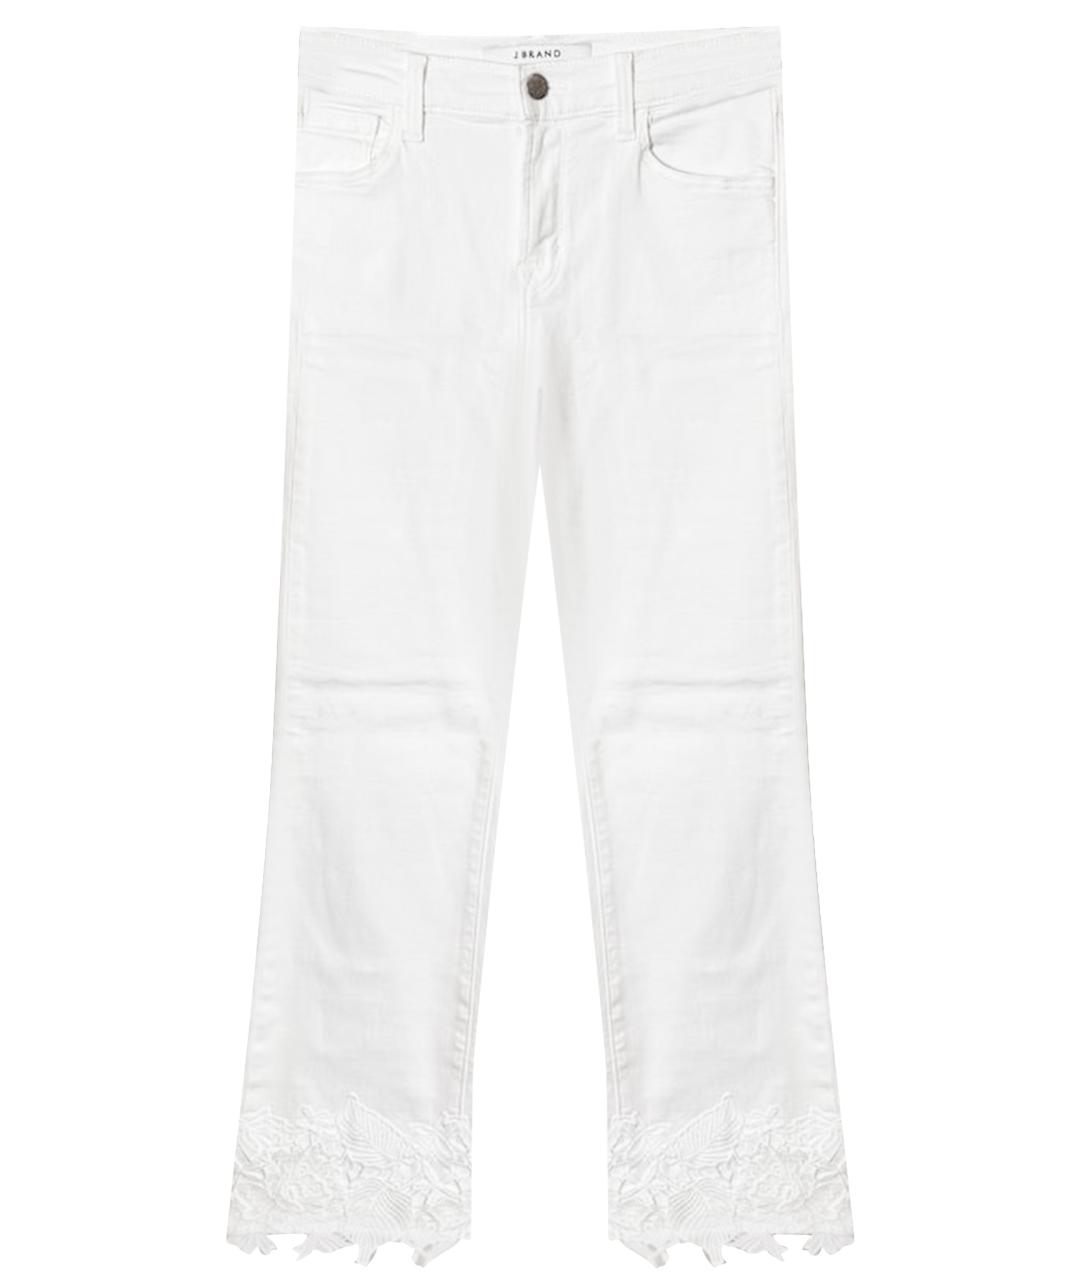 JBRAND Белые джинсы клеш, фото 1